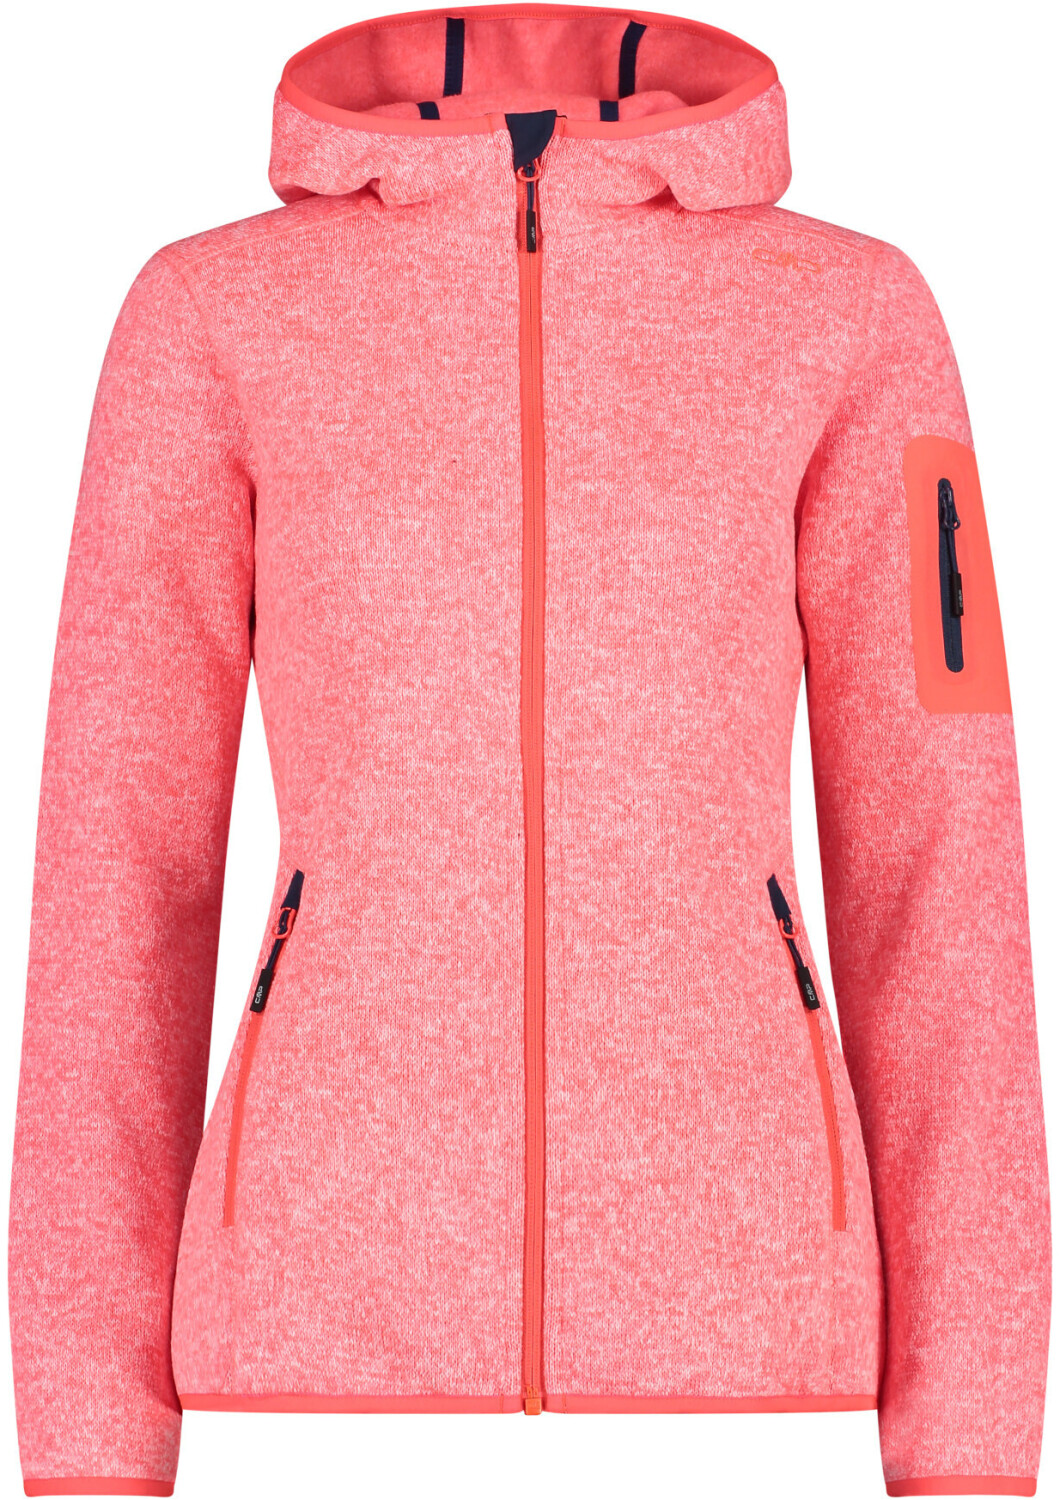 CMP Woman Fleece Jacket Fix Hood (3H19826) red fluo/bianco ab 28,78 € |  Preisvergleich bei